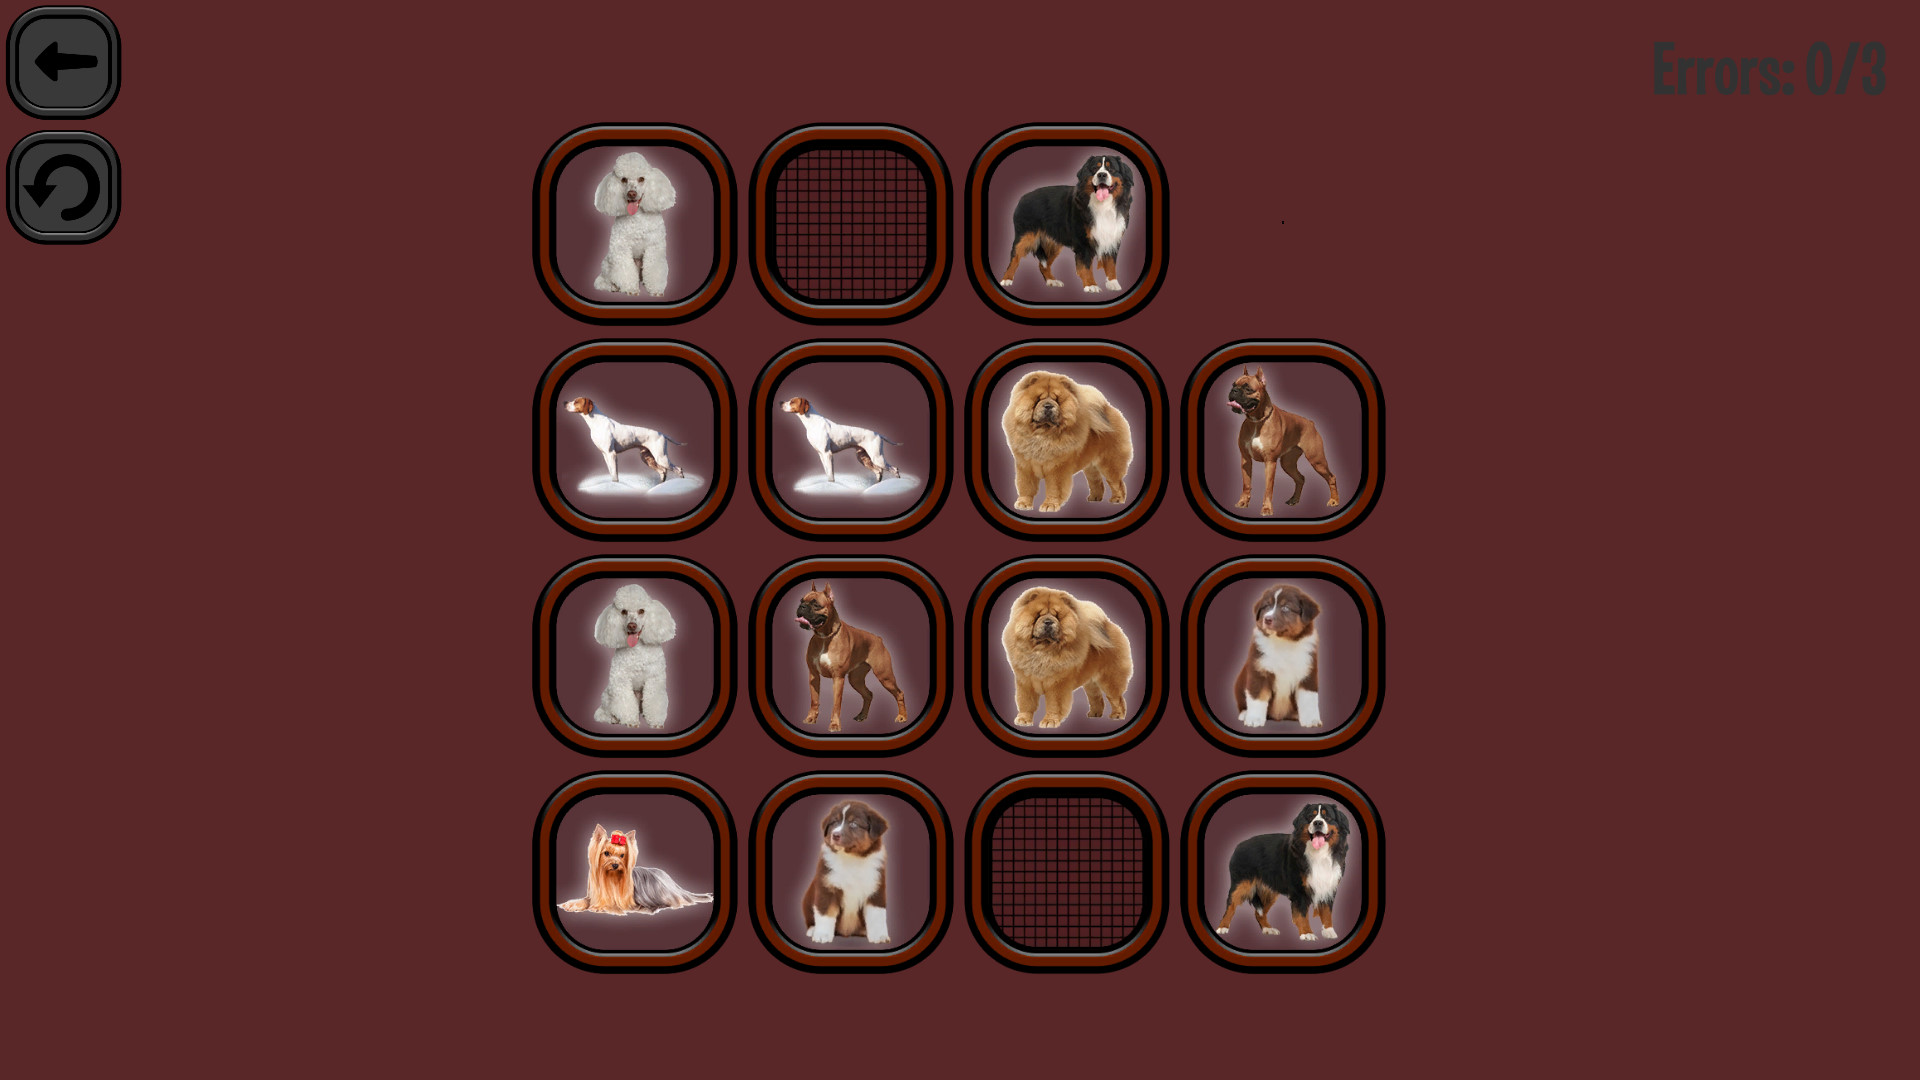 [$ 0.28] Animals Memory: Dogs Steam CD Key